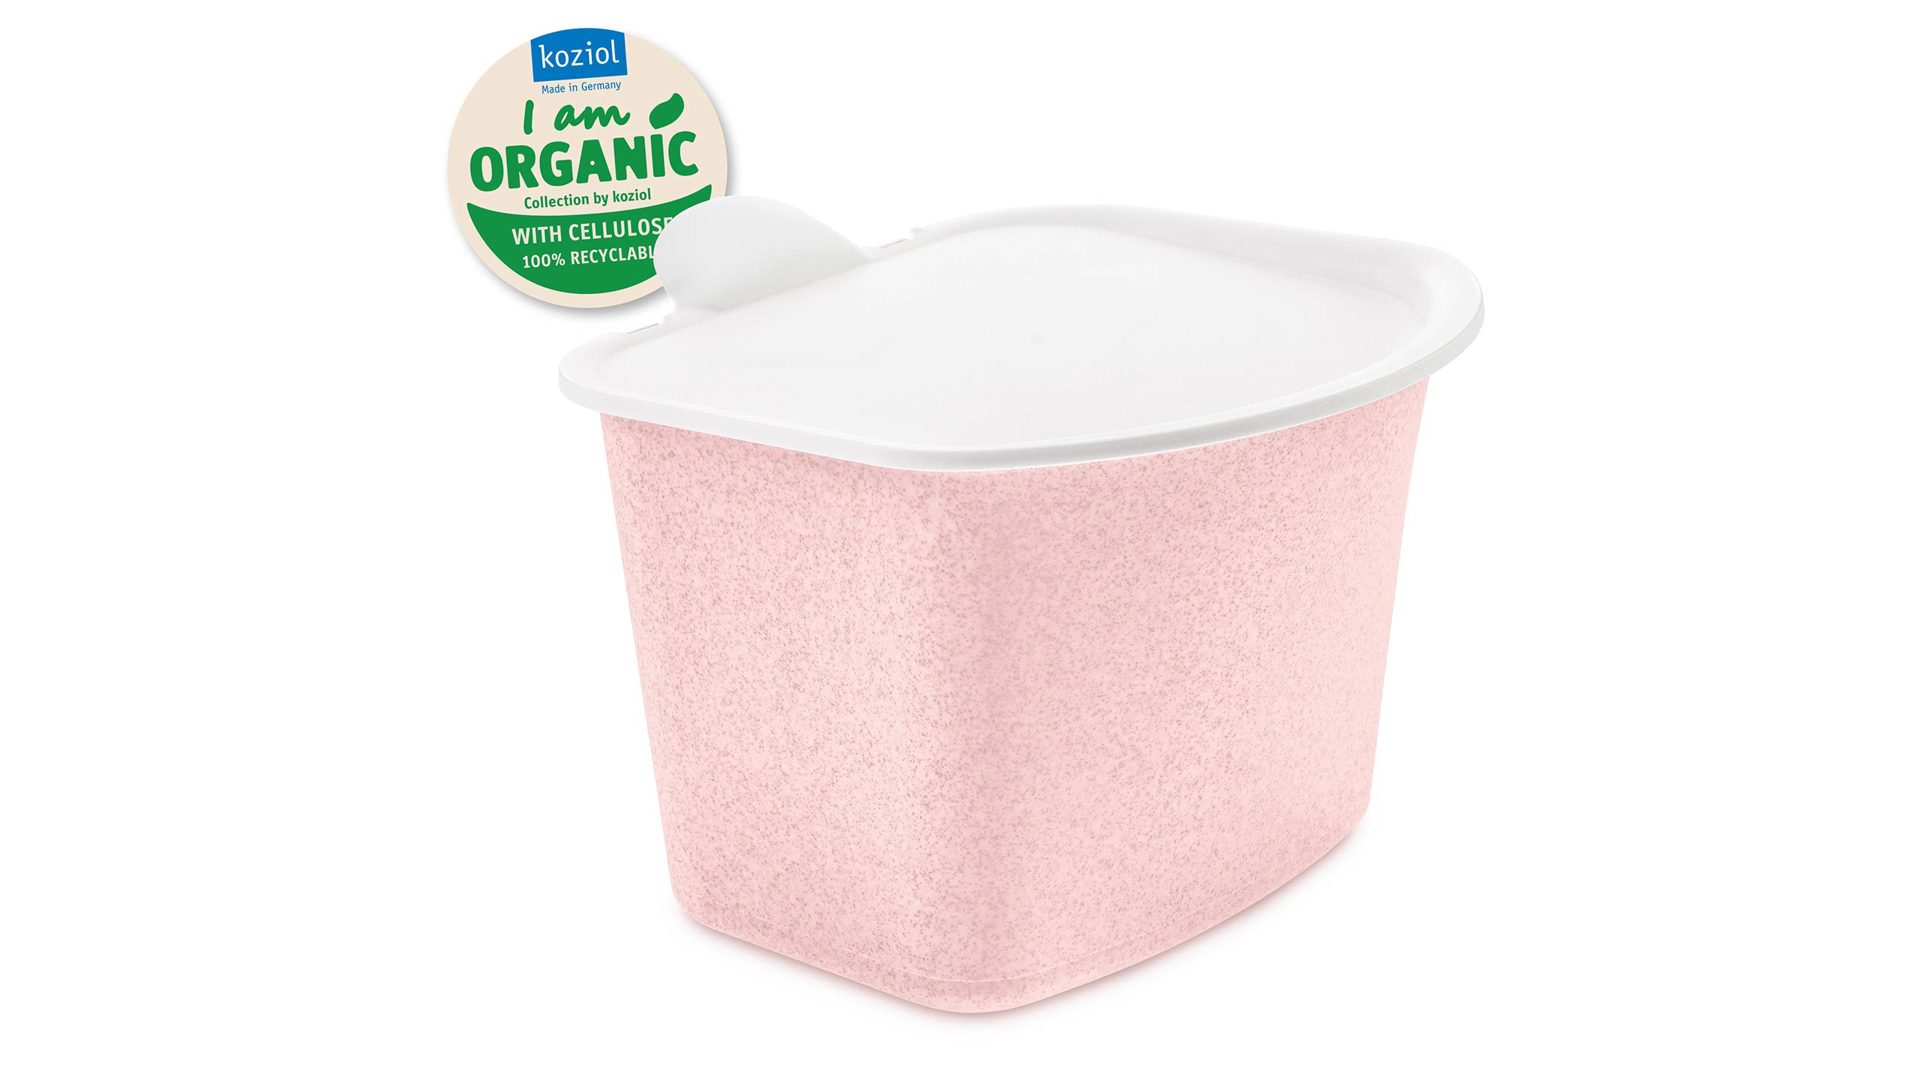 Mülleimer Koziol aus Kunststoff in Rosa KOZIOL Abfallbehälter BIBO organic pink - Kunststoff